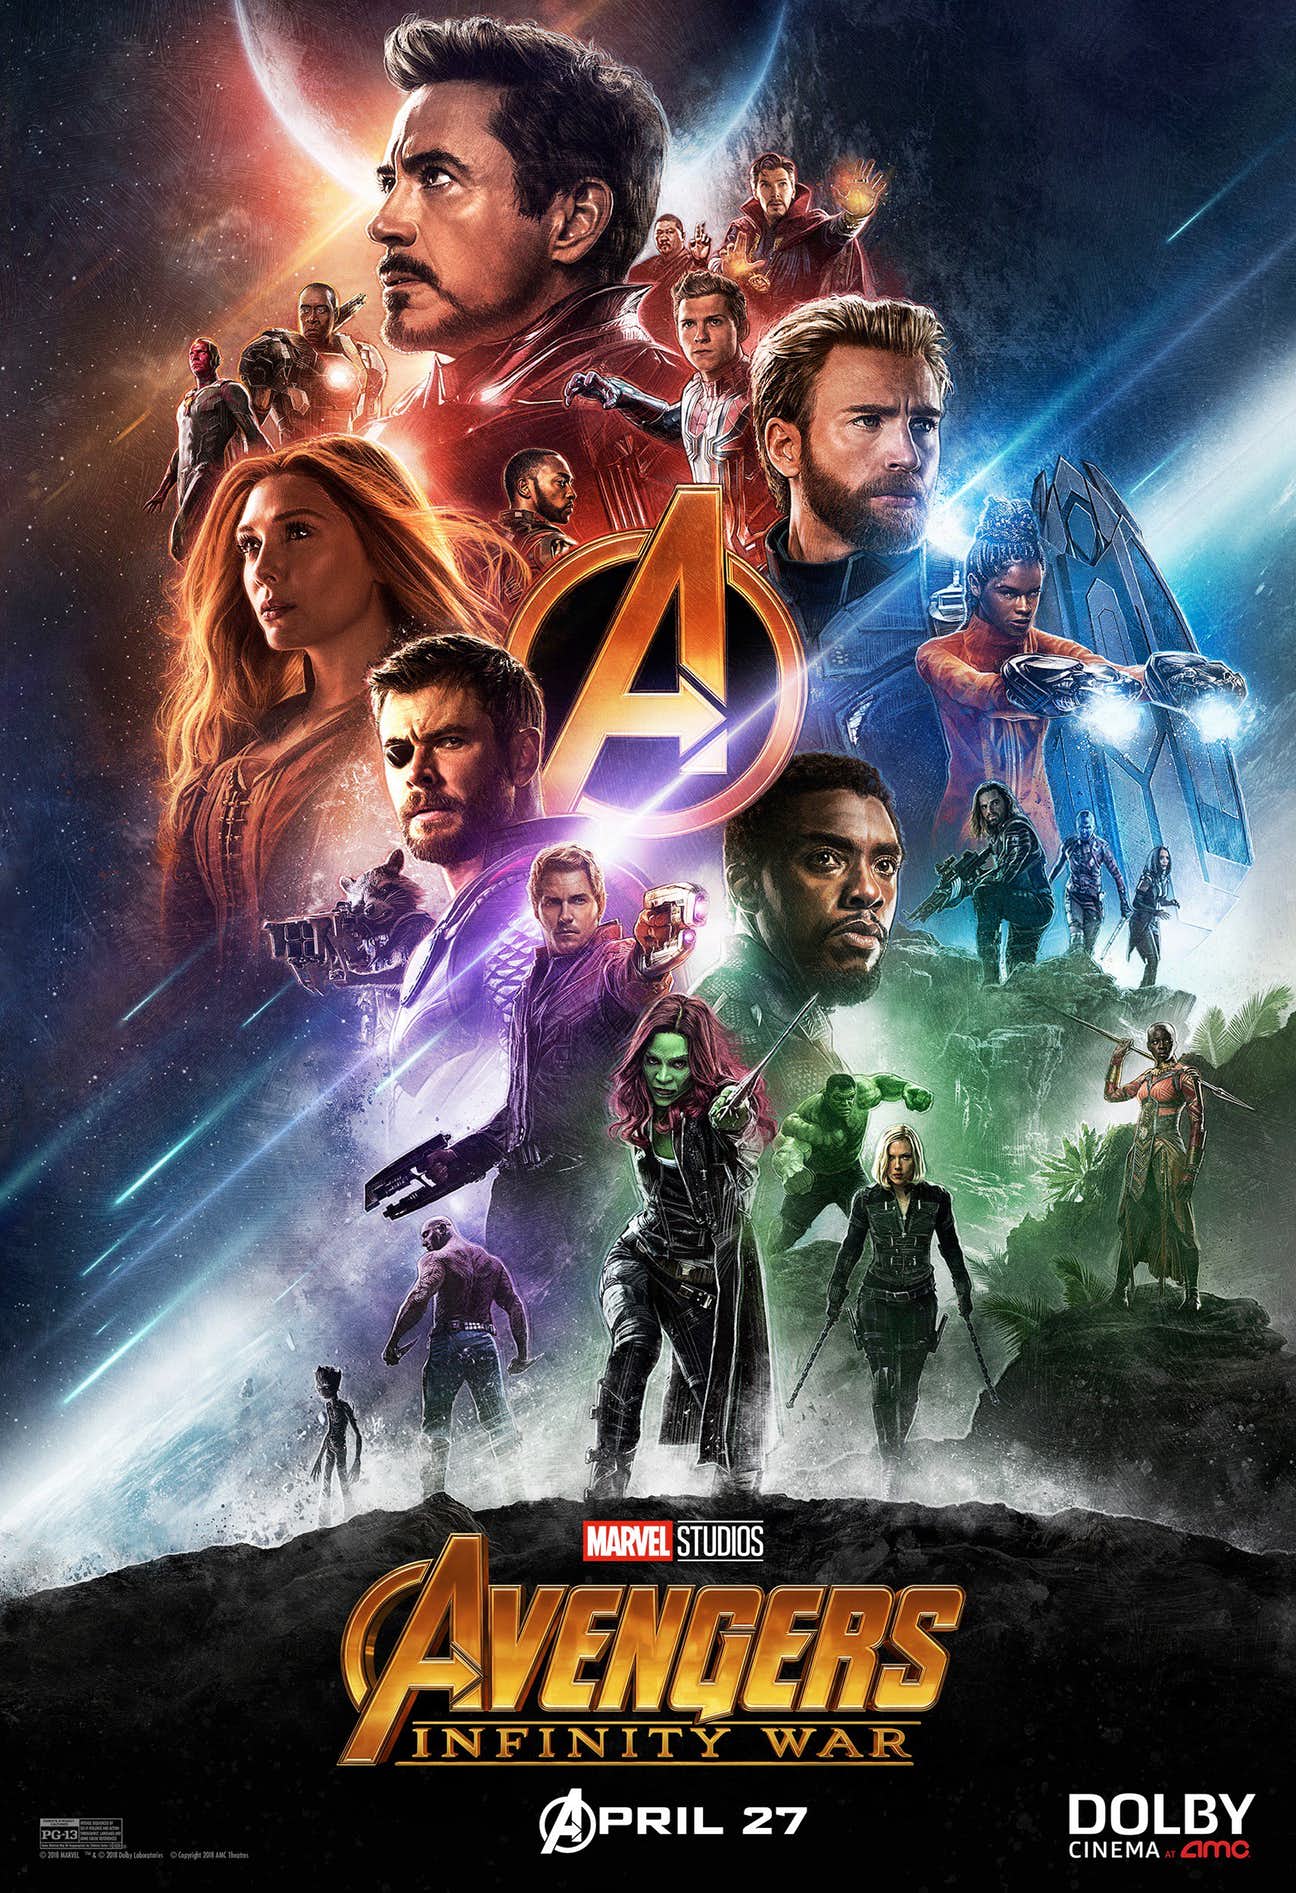 ¡Sorpresa! Liberan dos nuevos pósters de Avengers Infinity War Atomix